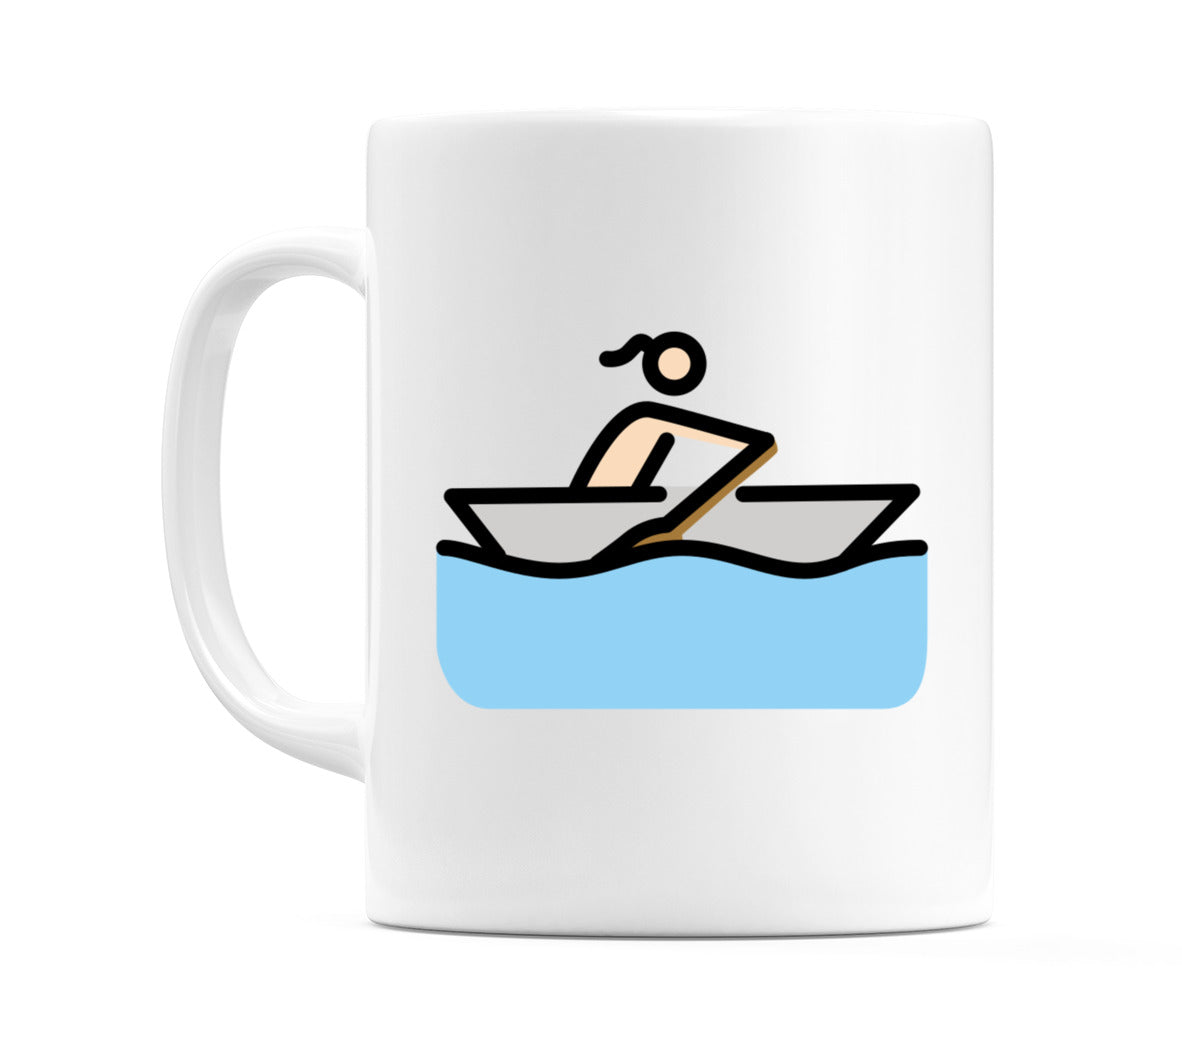 Female Rowing Boat: Light Skin Tone Emoji Mug